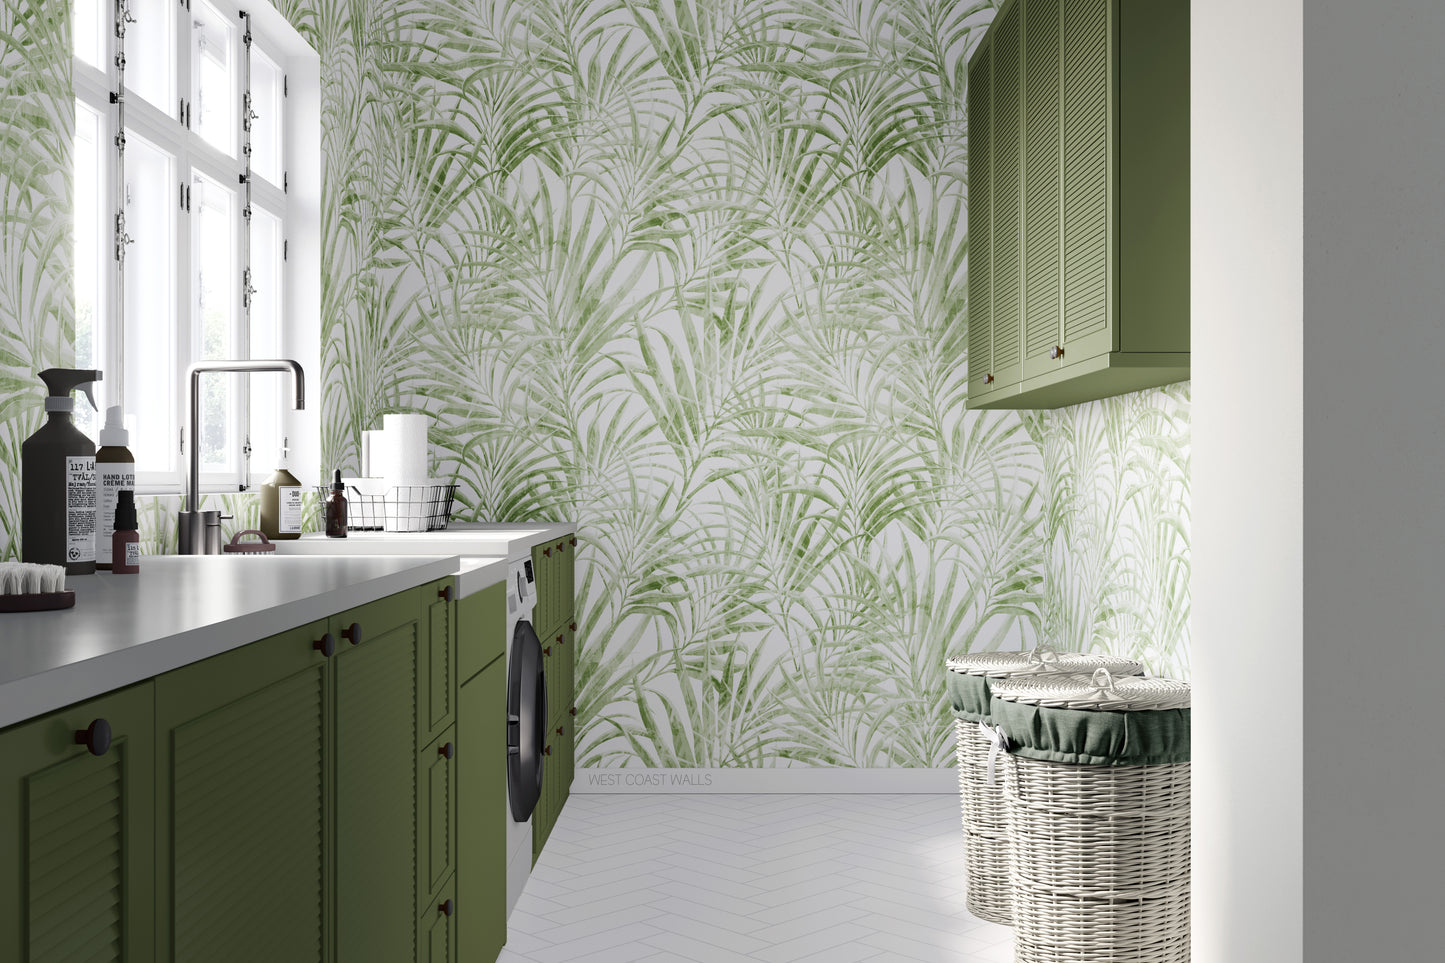 Sage Palm Leaves Wallpaper